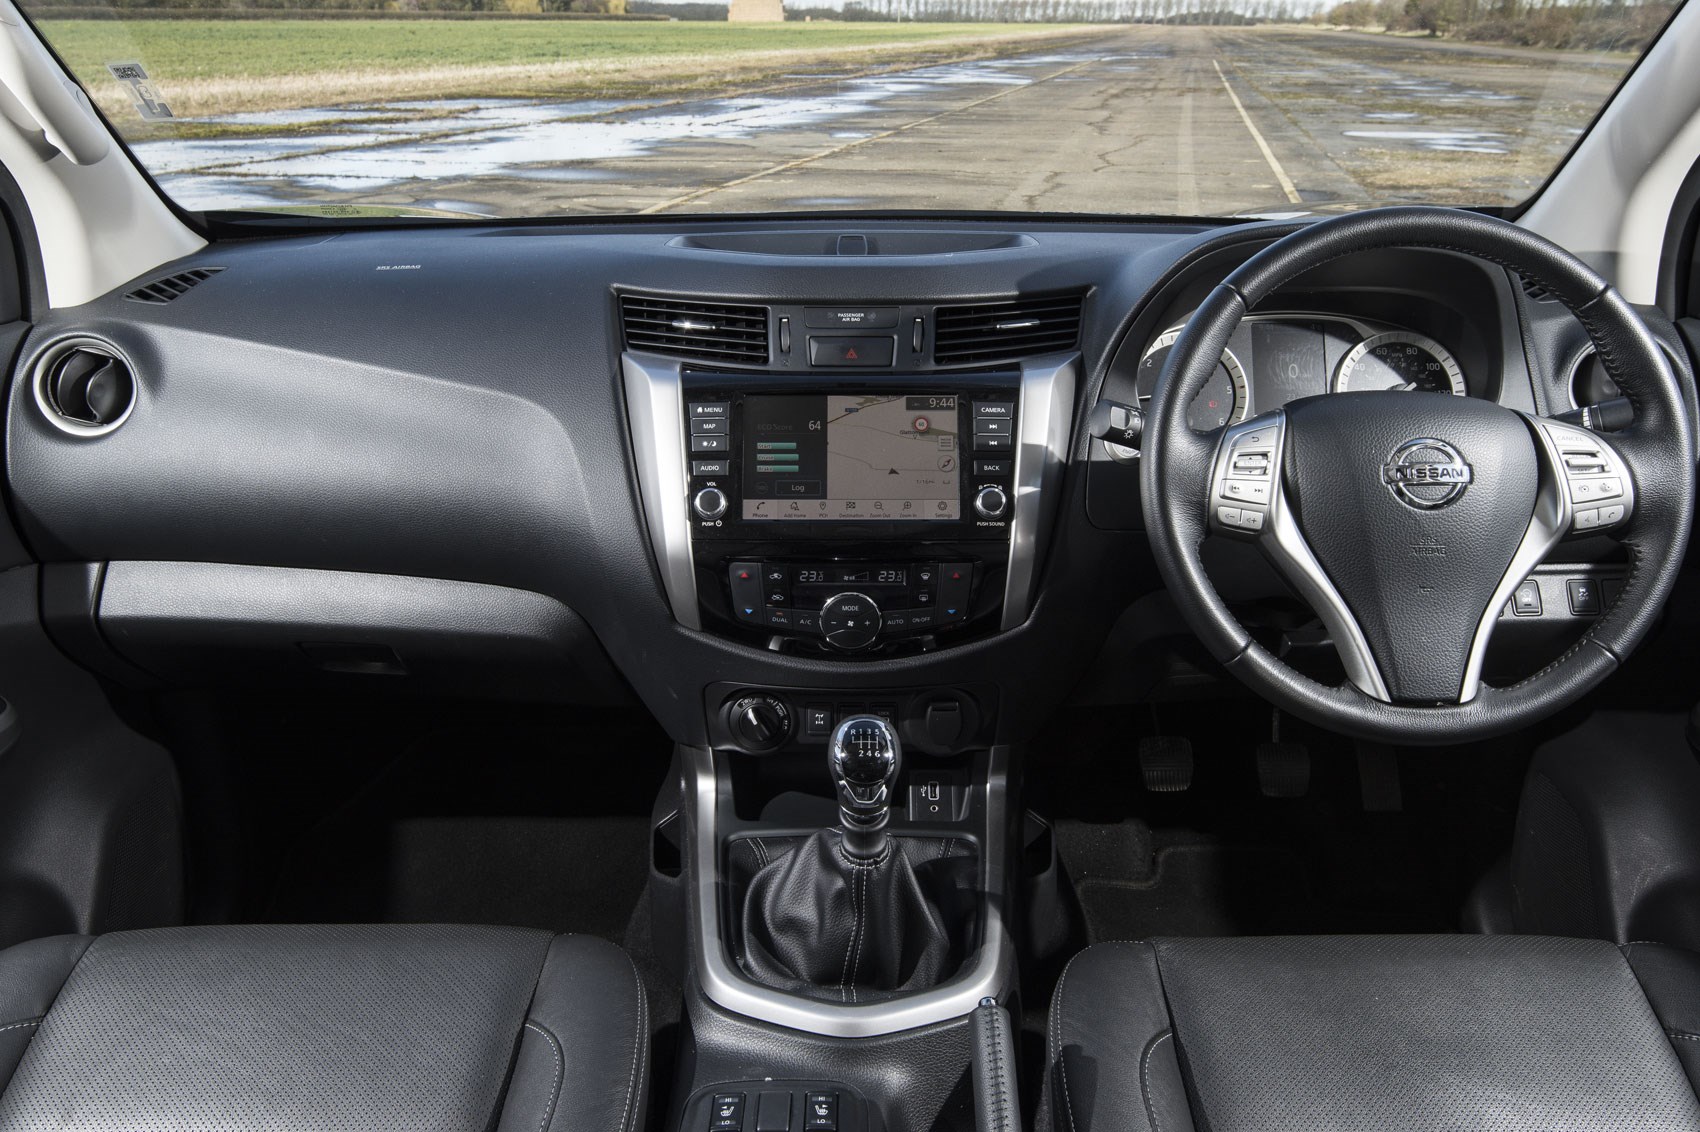 Nissan Navara review, 2019 update model, cab interior